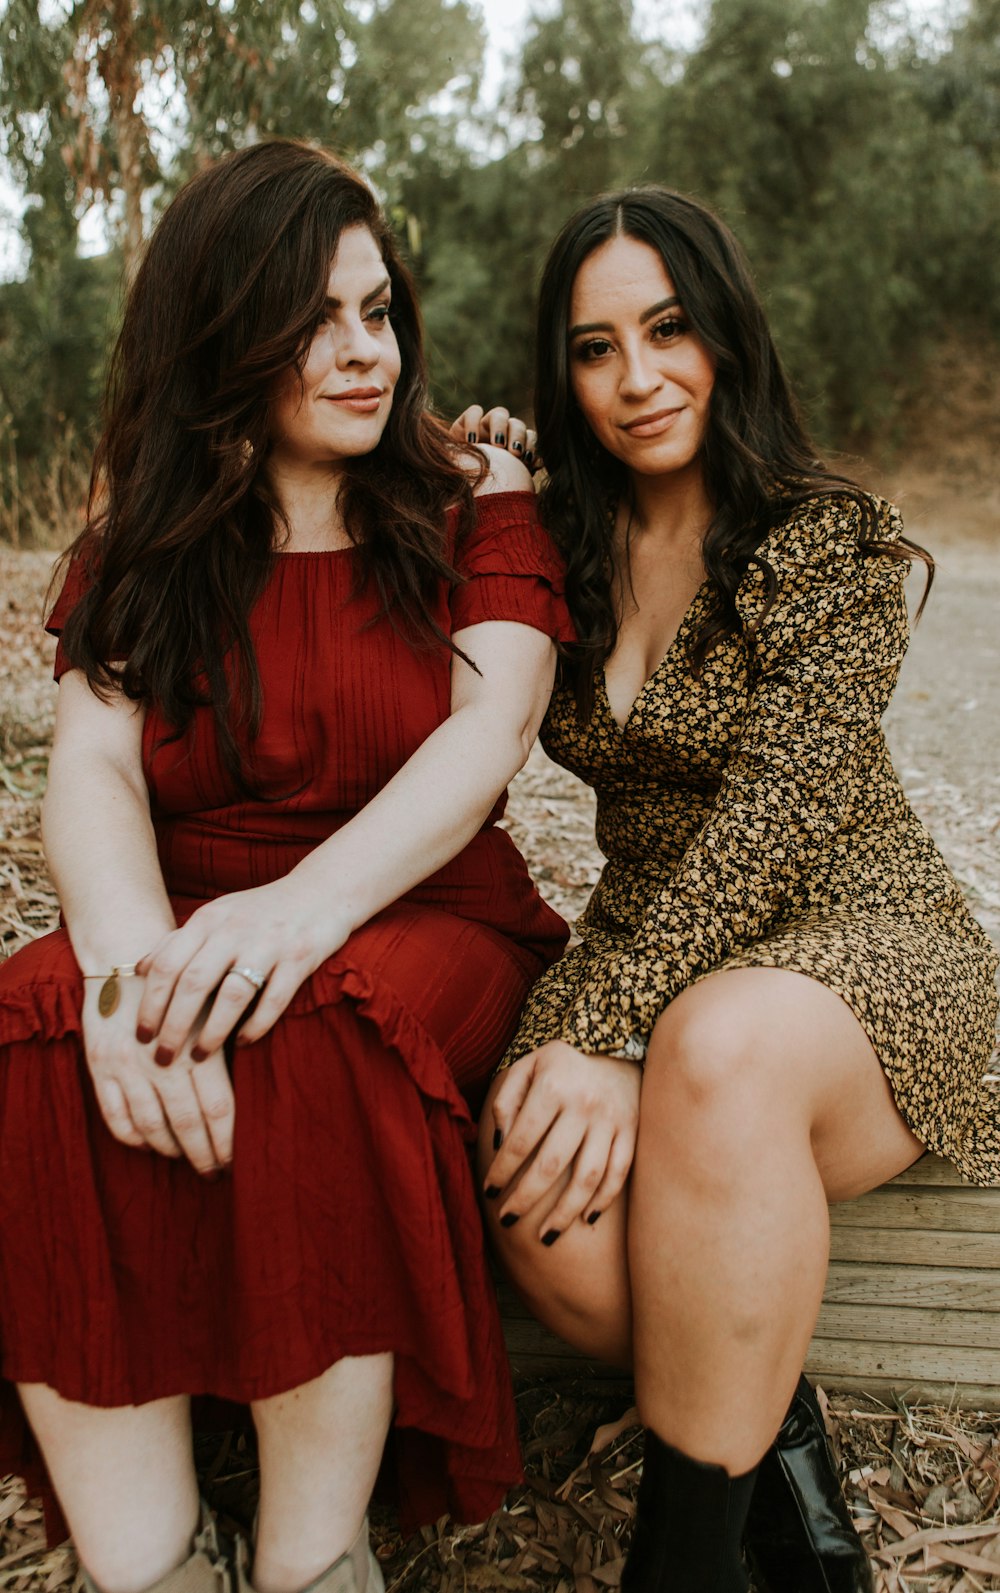 2 women sitting on brown wooden bench